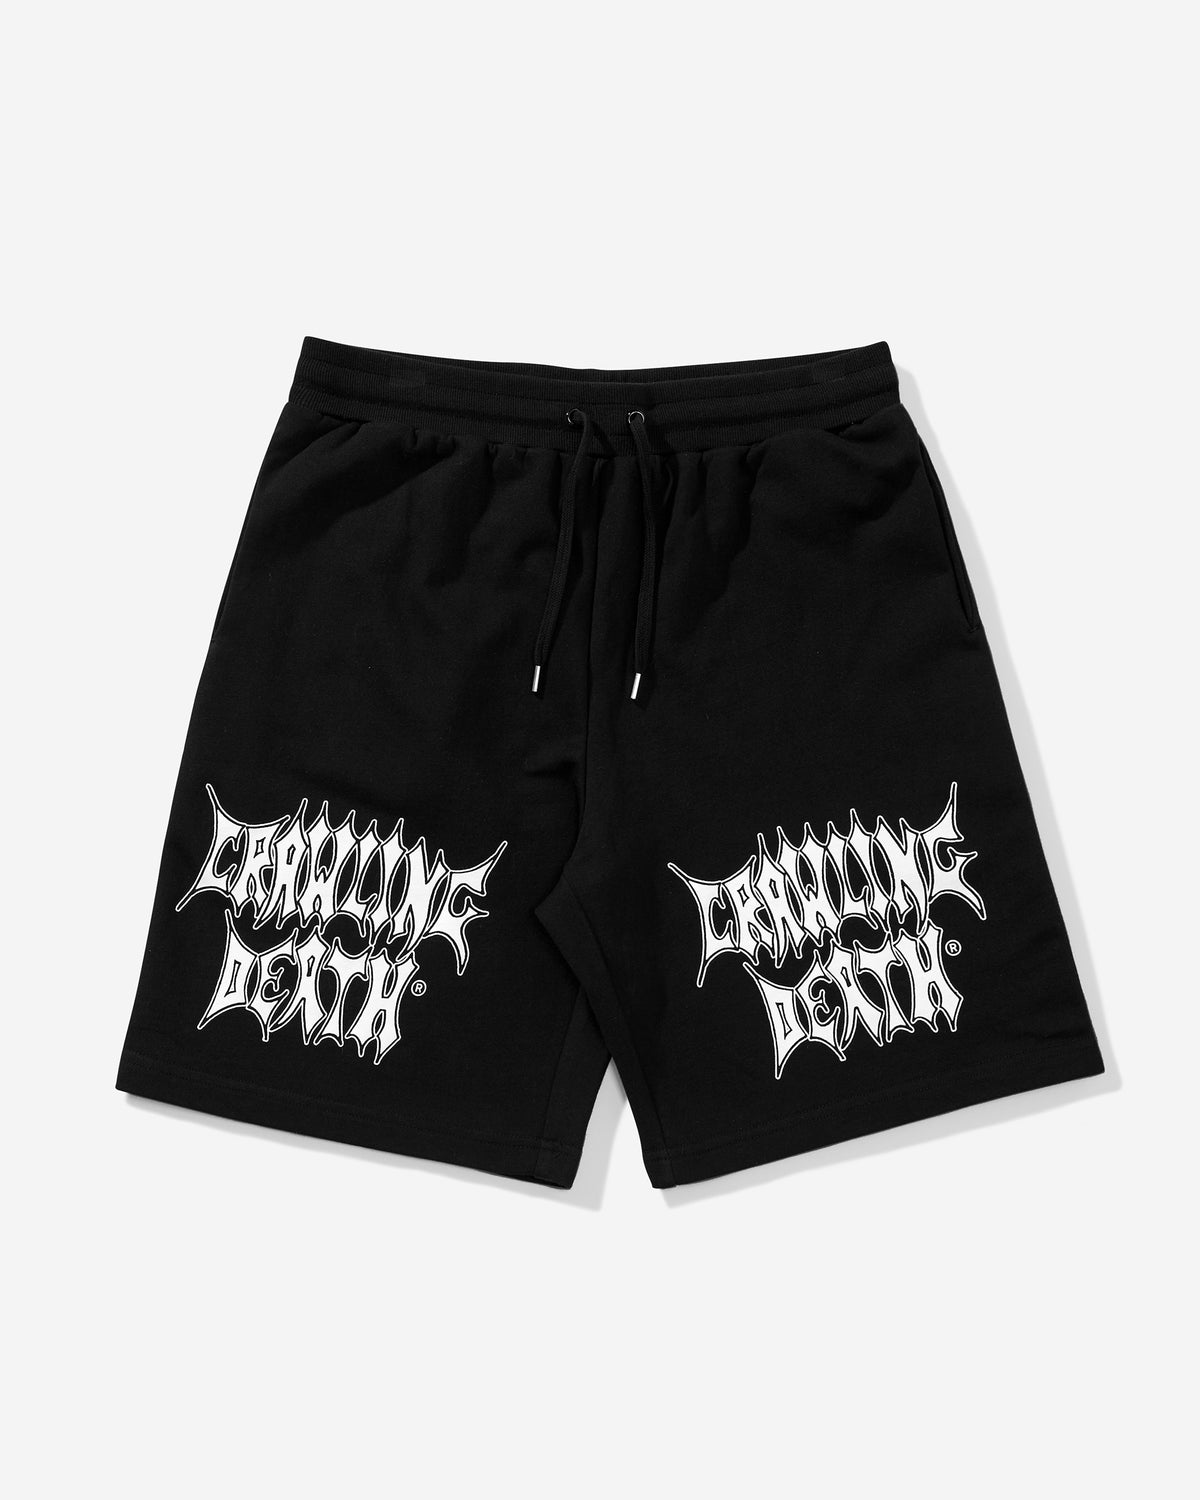 Metal Fleece Shorts | Crawling Death